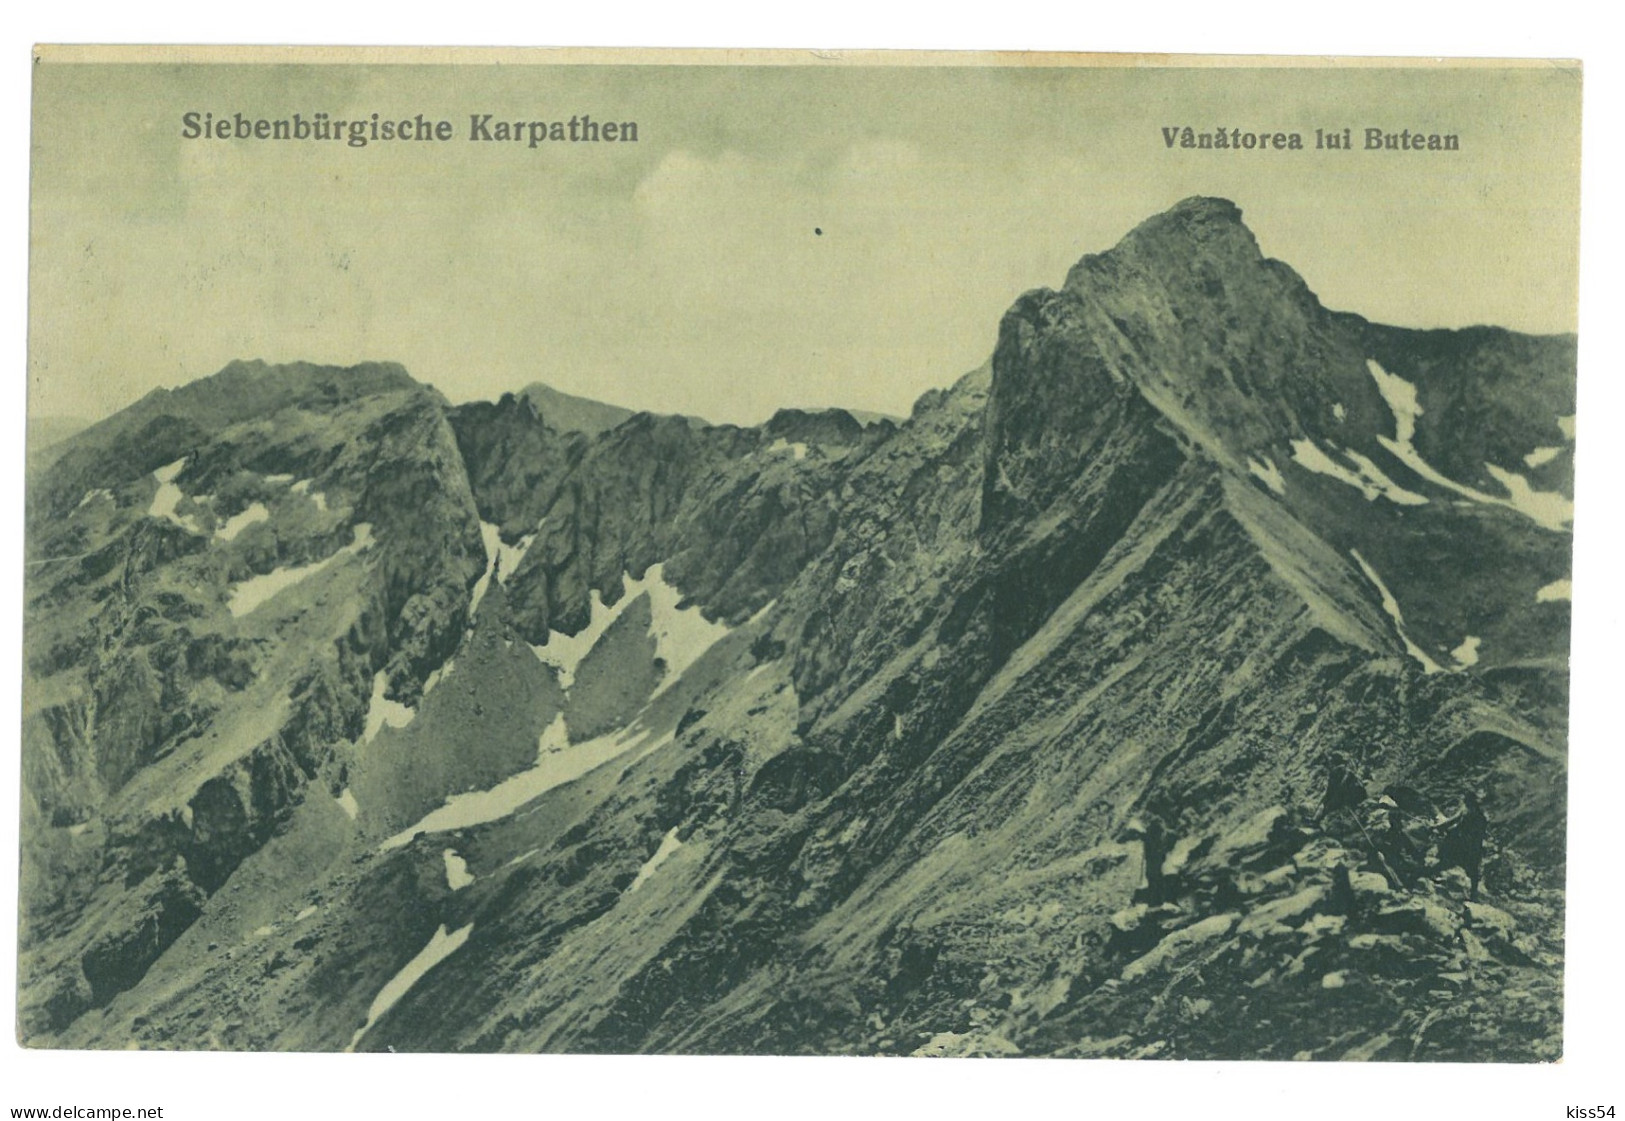 RO 05 - 22728 GARBOVA Mountain, Sibiu S.K.V. Hunters, Romania - Old Postcard, CENSOR - Used - 1917 - Roumanie